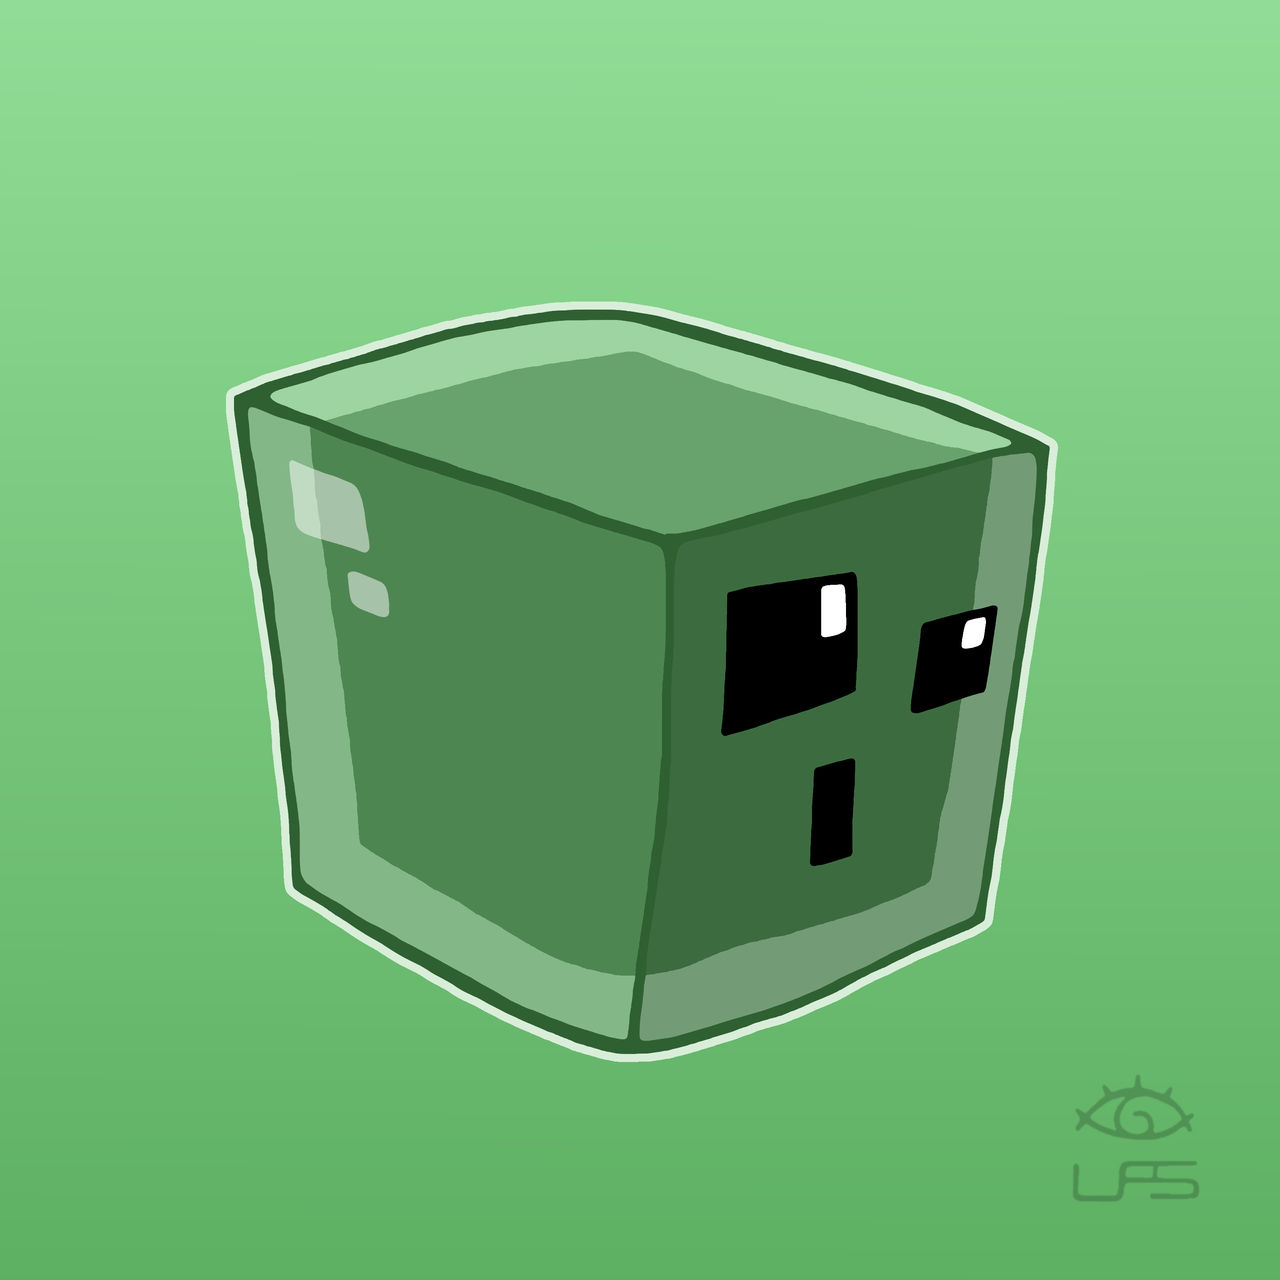 Minecraft Slime by LiquidFrogStudios on DeviantArt